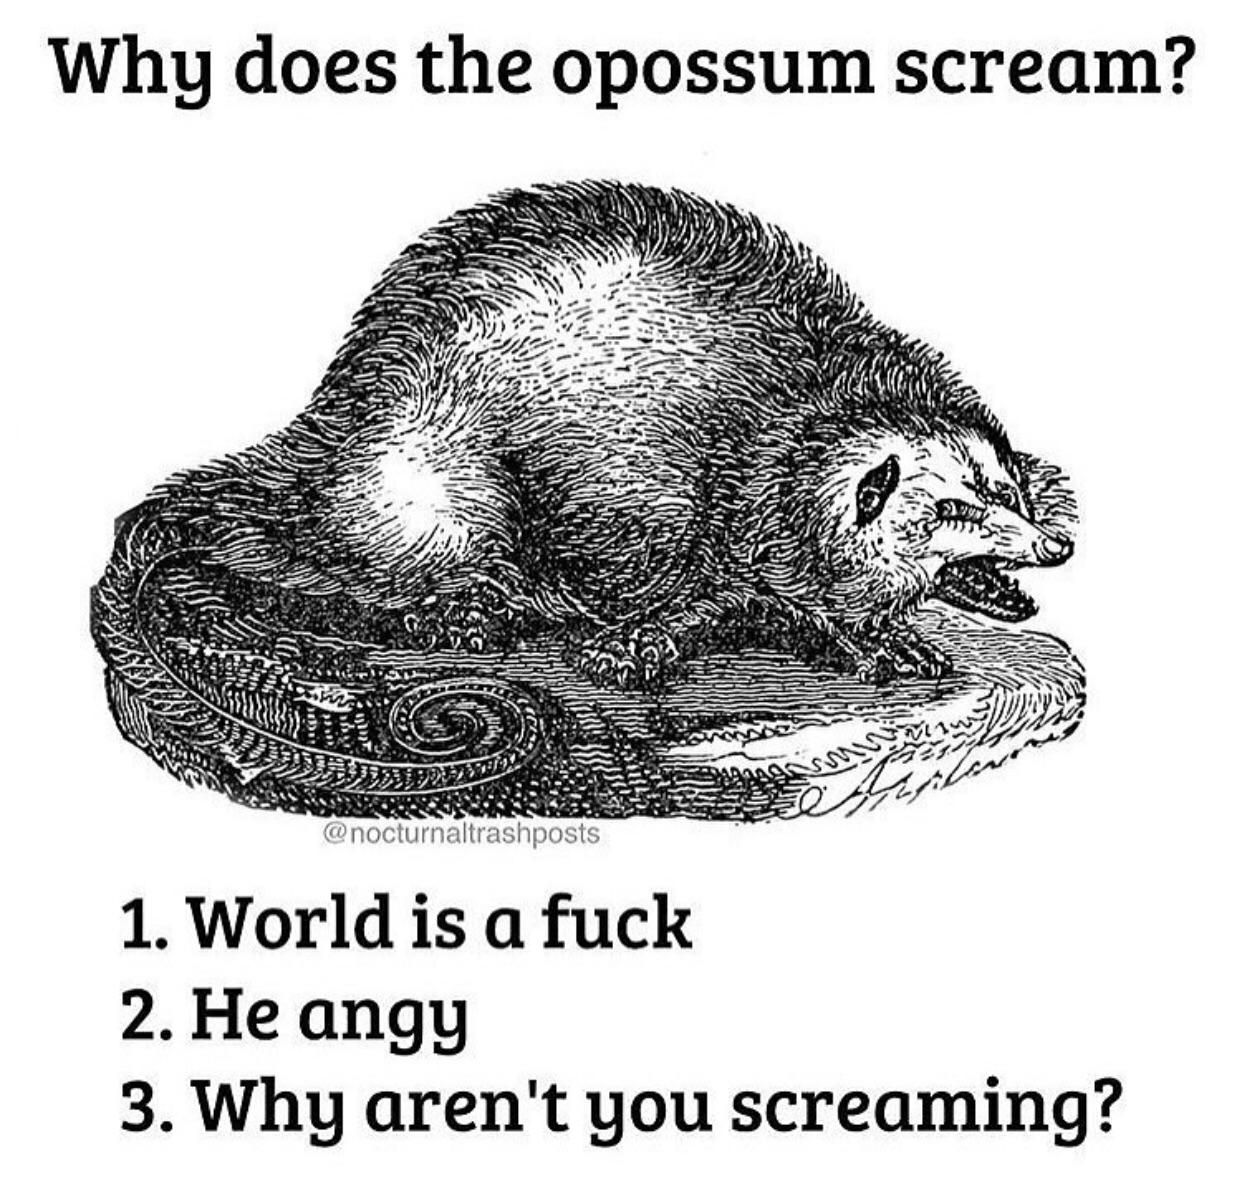 The opossum has a right to scream